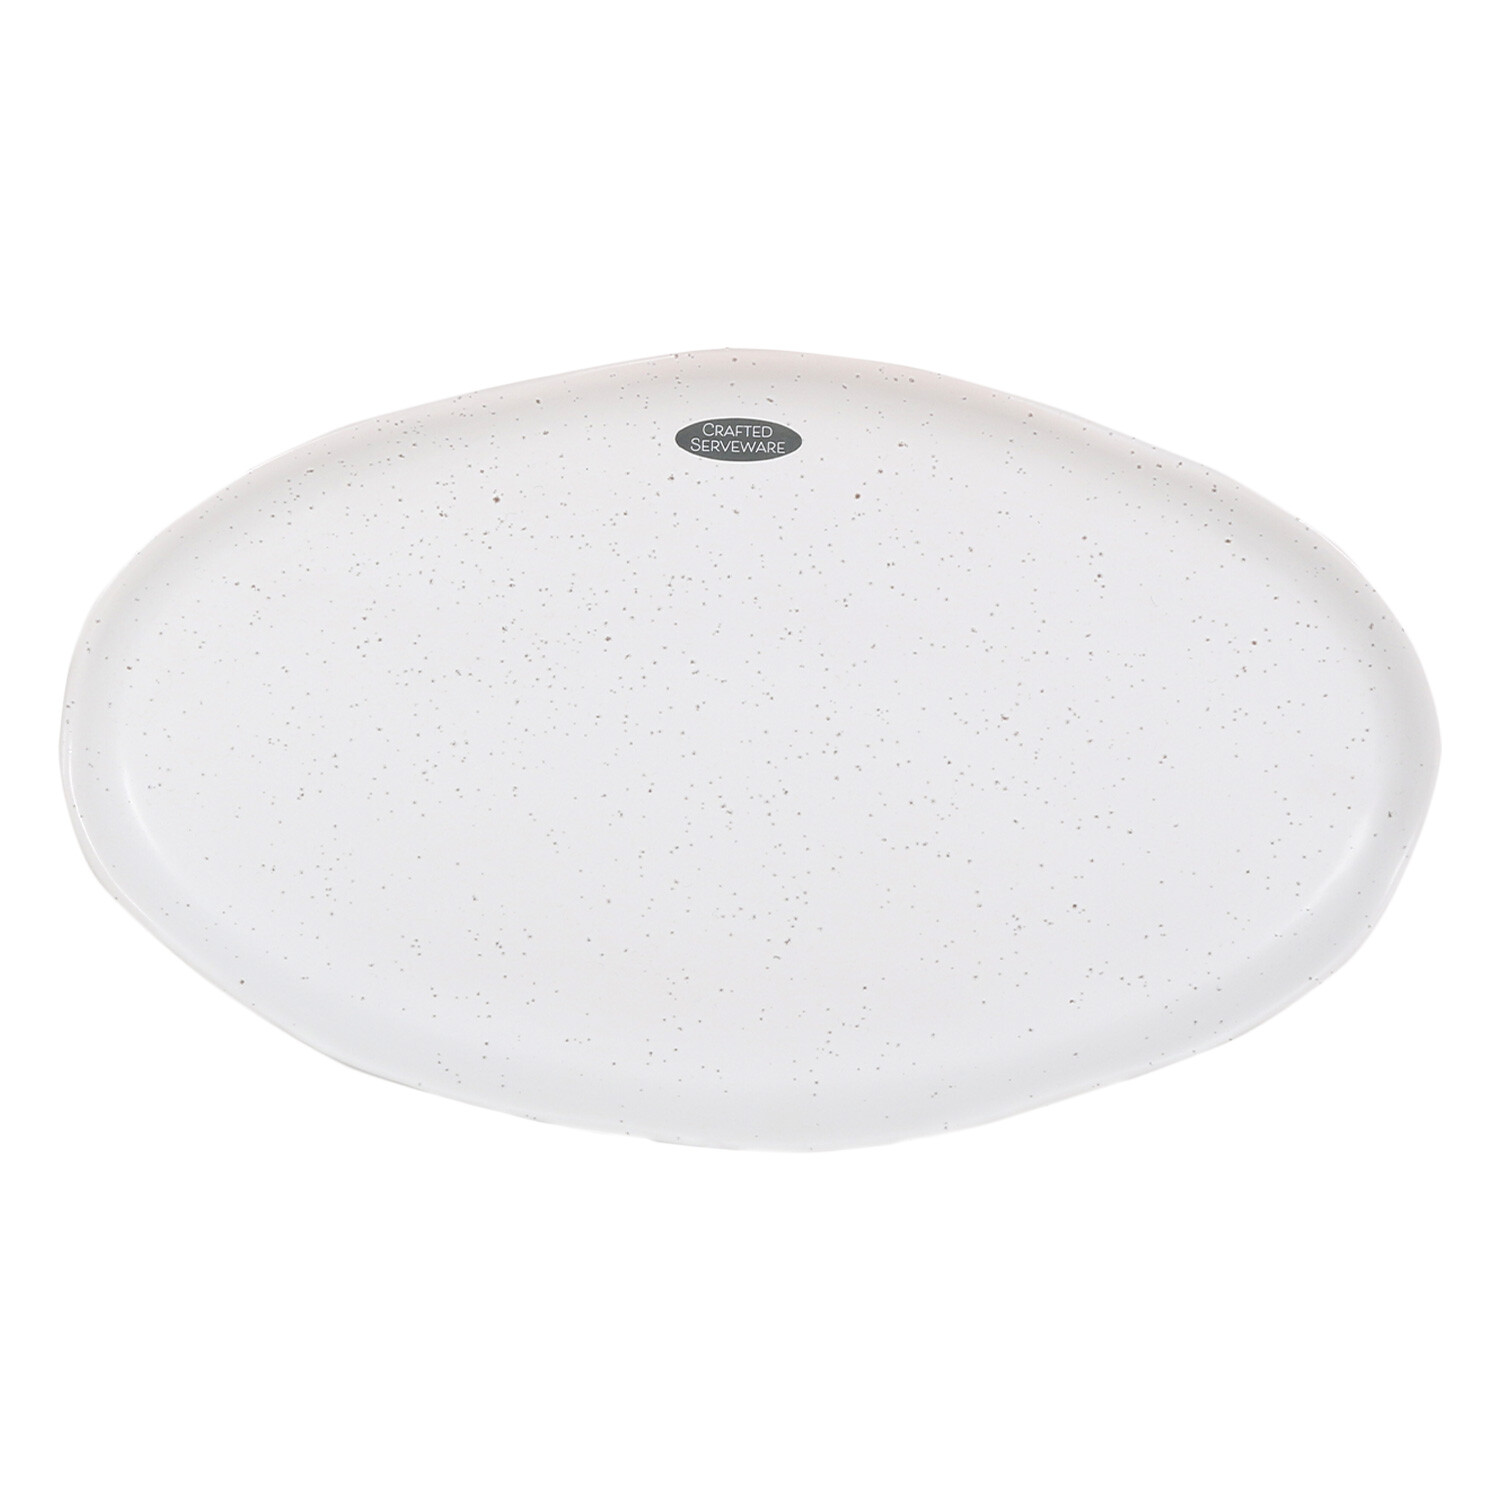 Crafted Serveware White Stoneware Serving Platter Image